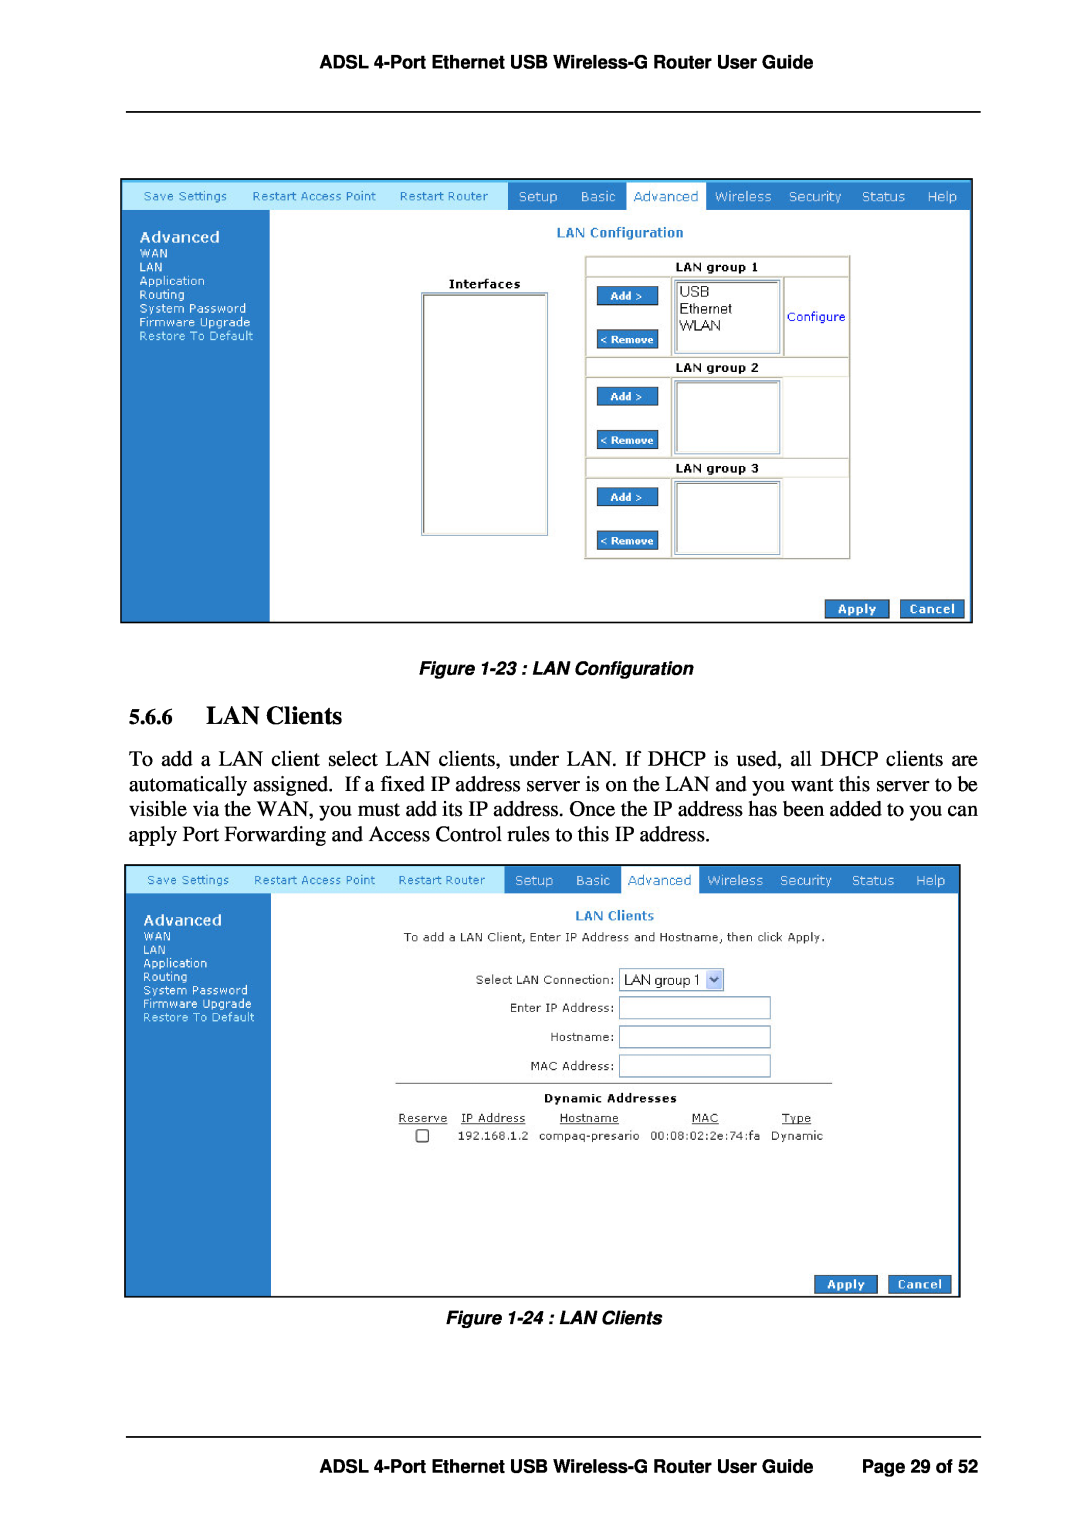 APC ADSL 4-Port manual 23 LAN Configuration, 24 LAN Clients 